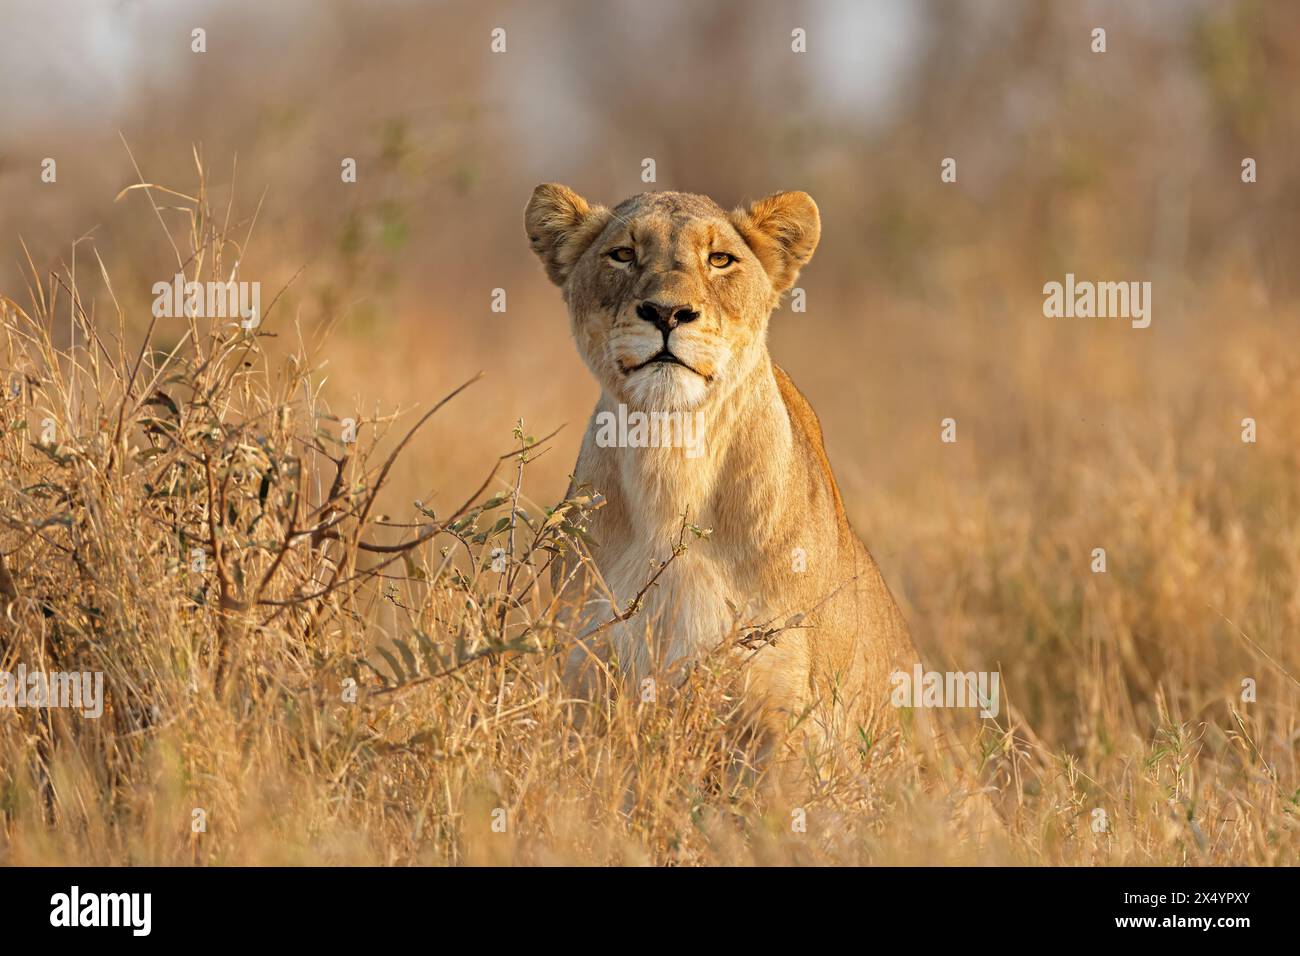 An alert lioness (Panthera leo) in natural habitat, Kruger National Park, South Africa Stock Photo